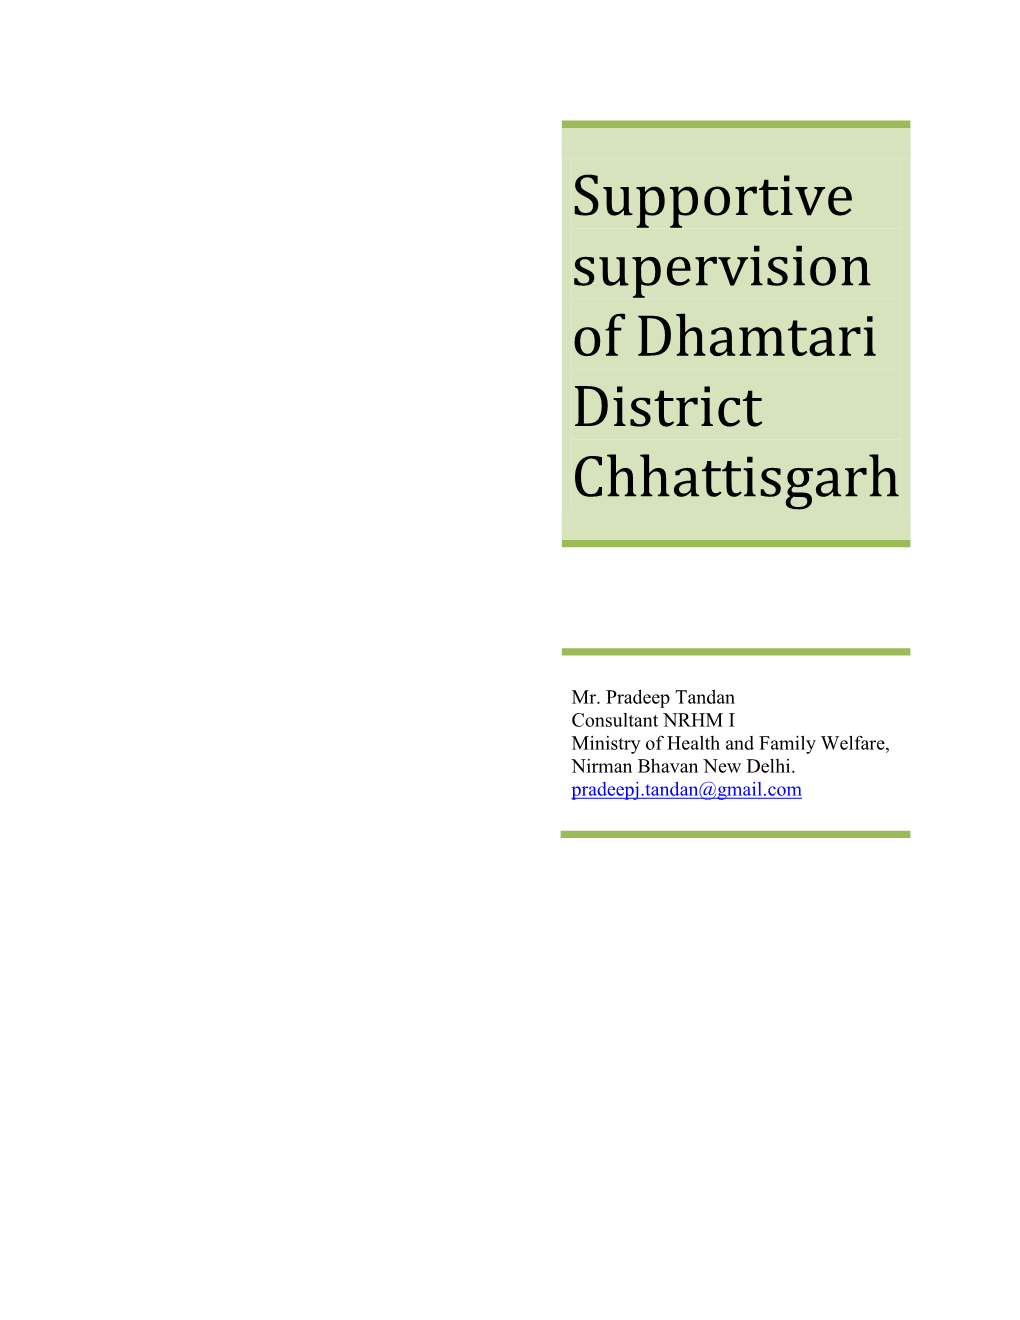 Supportive Supervision of Dhamtari District Chhattisgarh